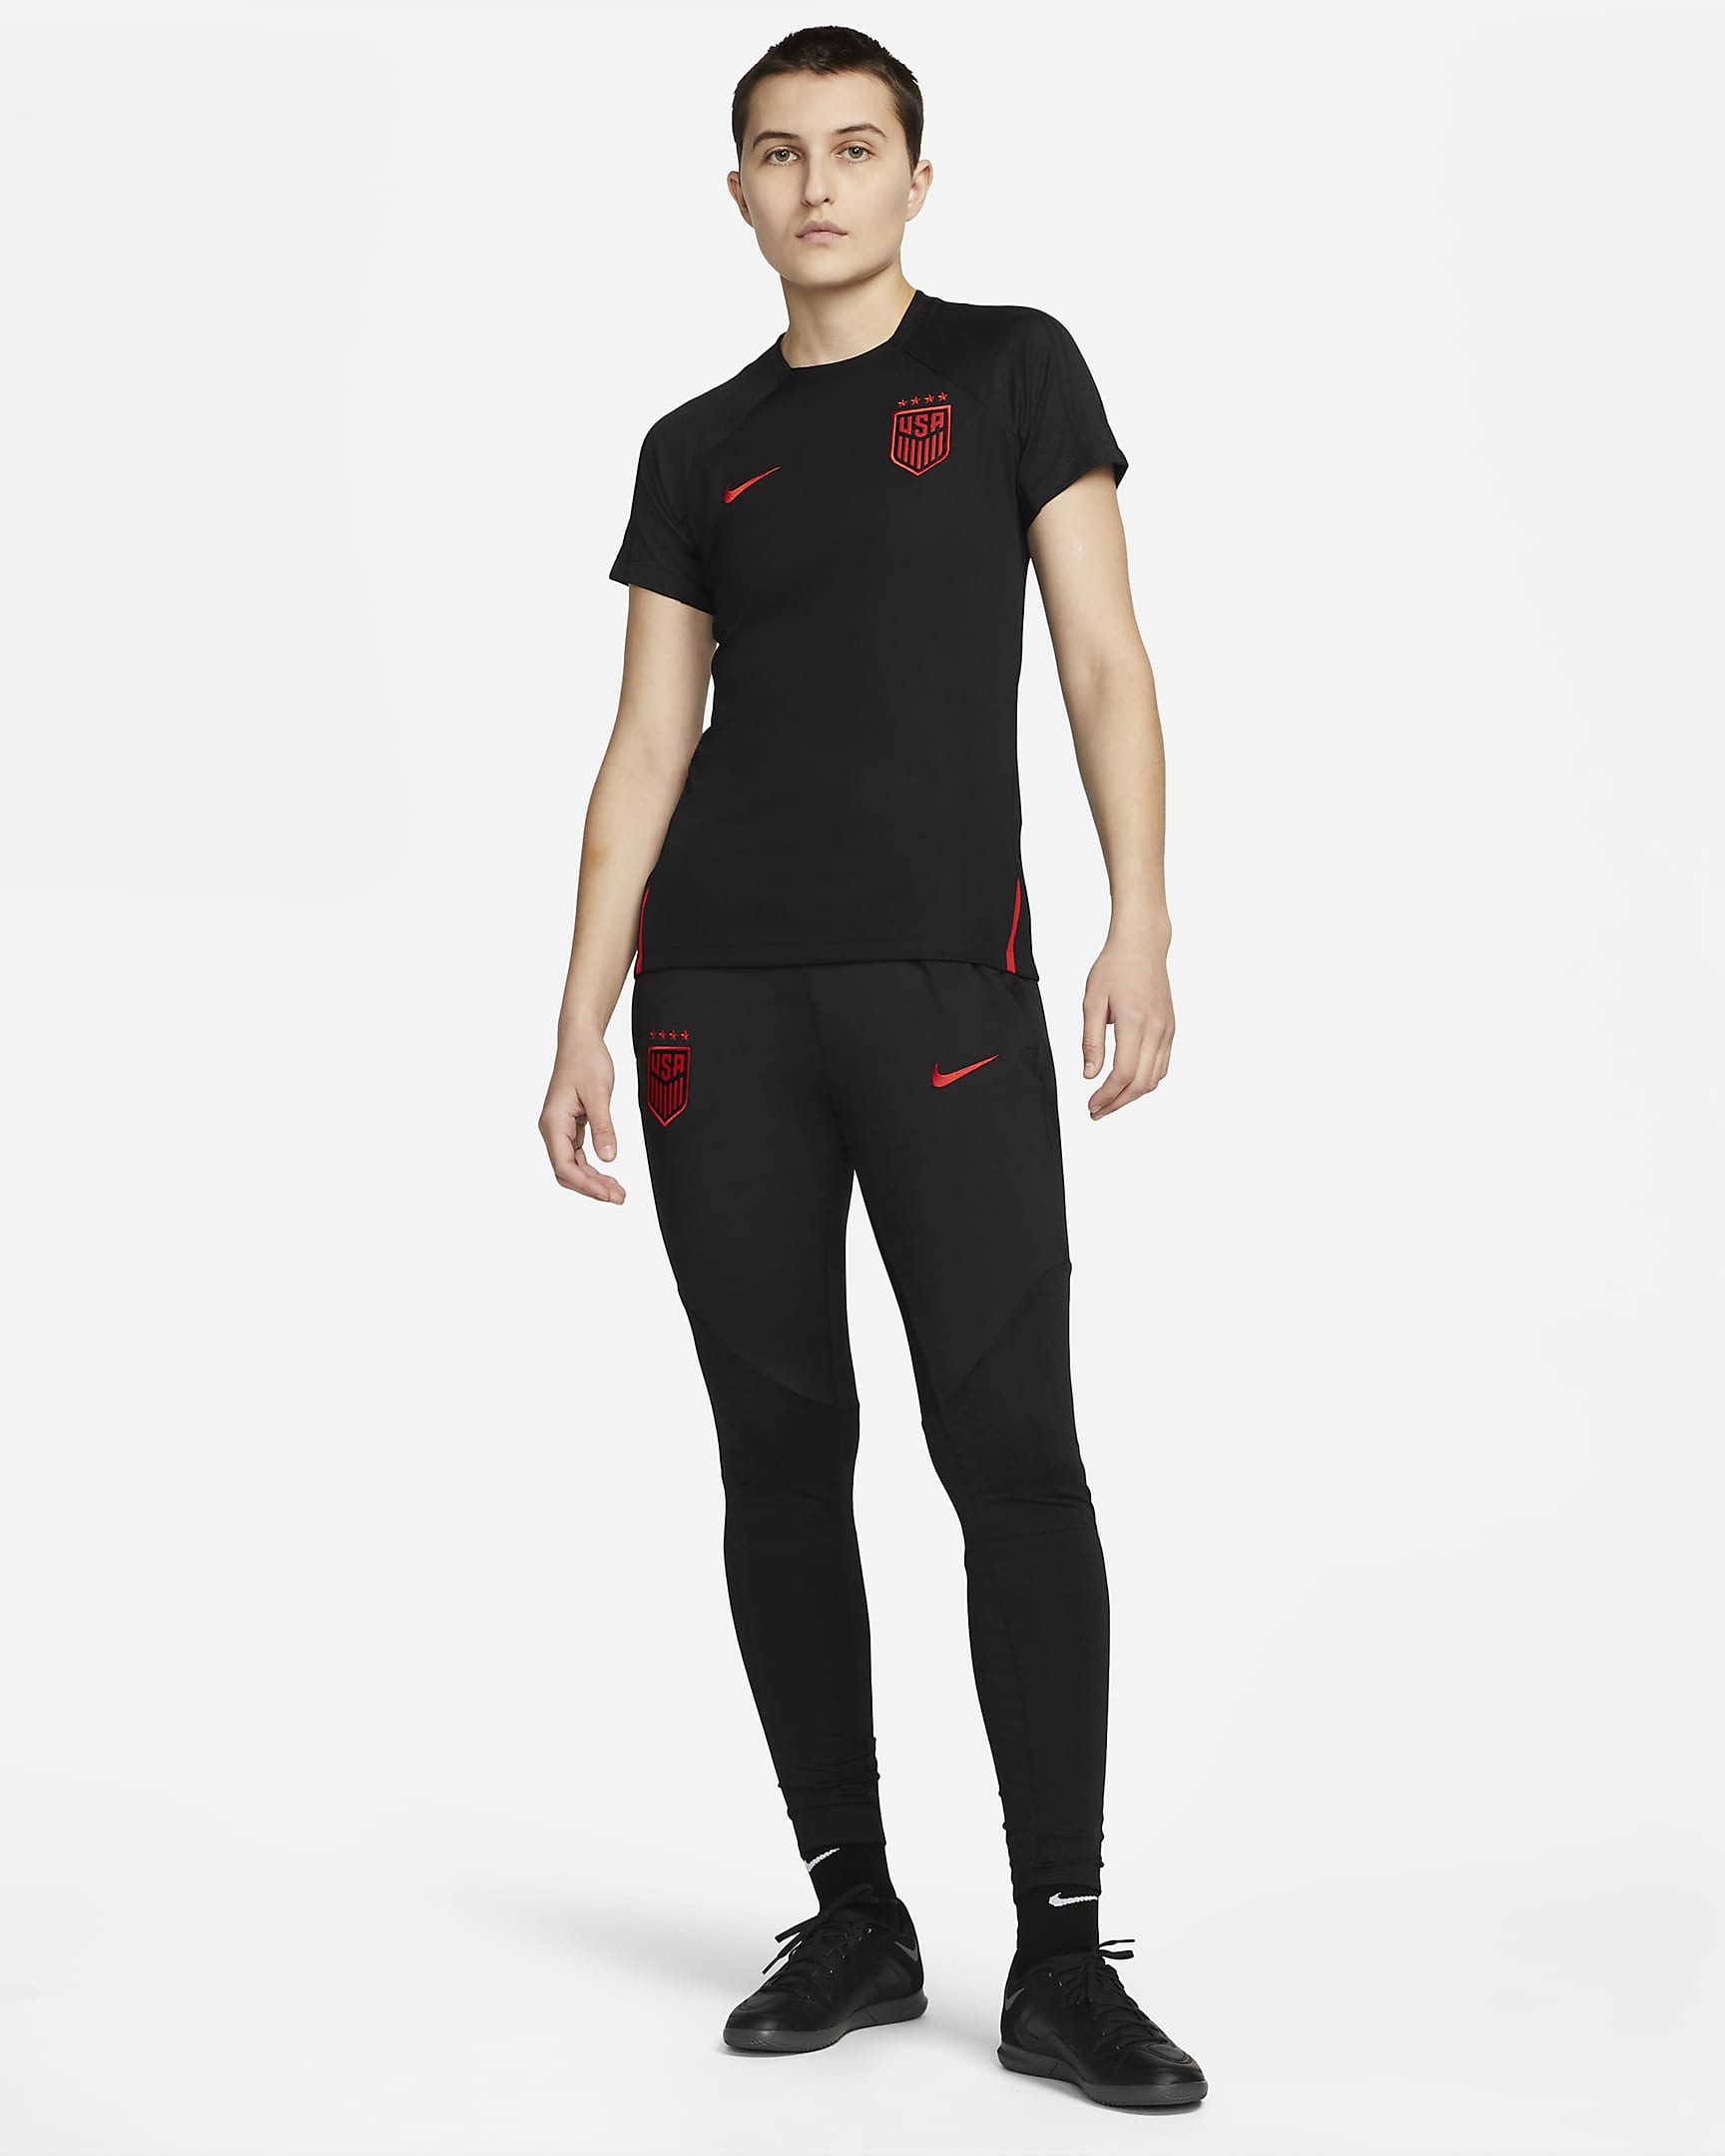 U.S. Strike Women's Nike Dri-FIT Knit Soccer Top. Nike.com